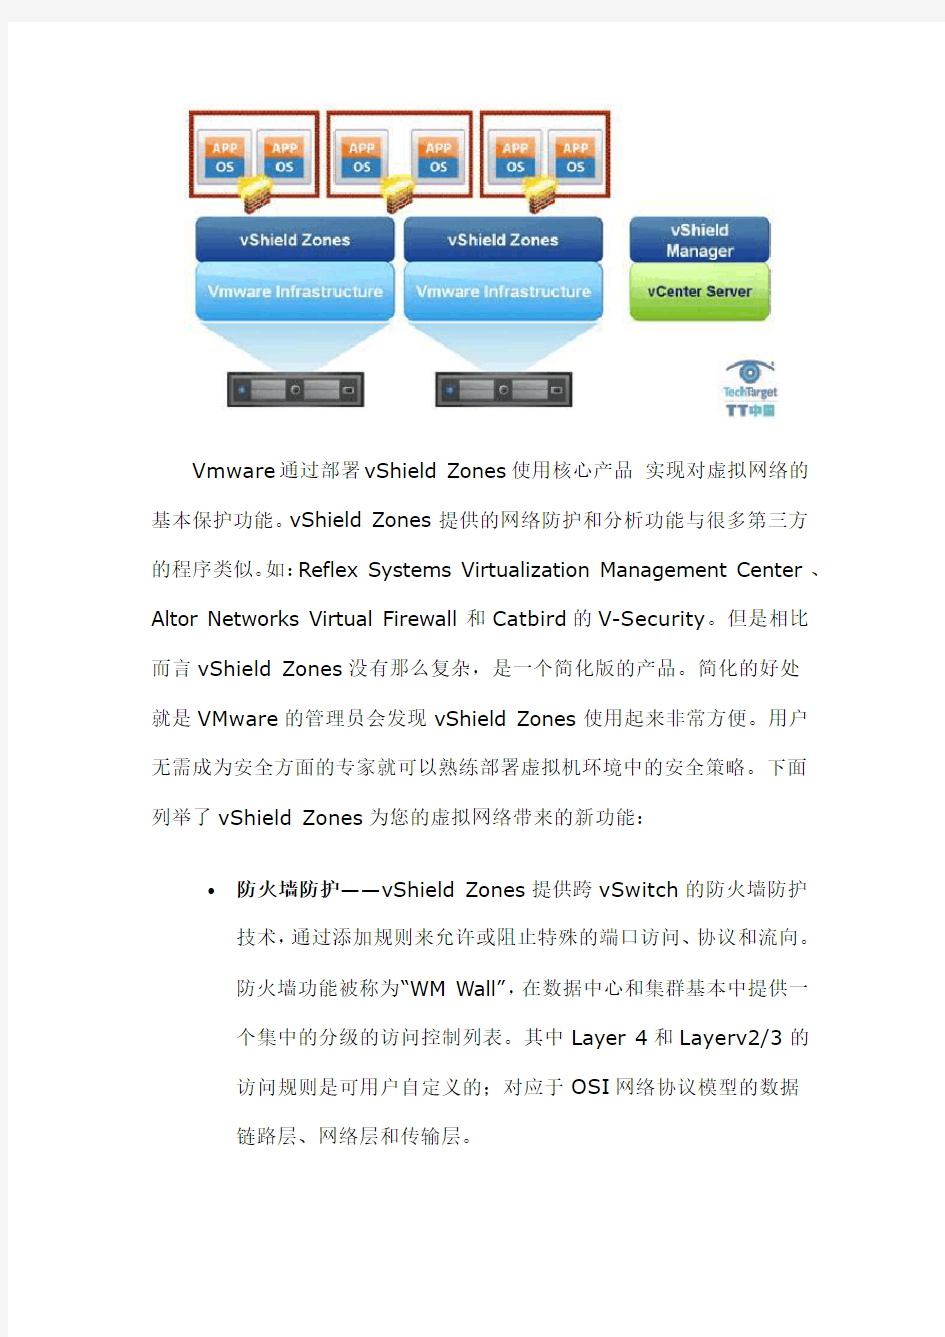 VMware vShield Zones 组件及其工作原理介绍